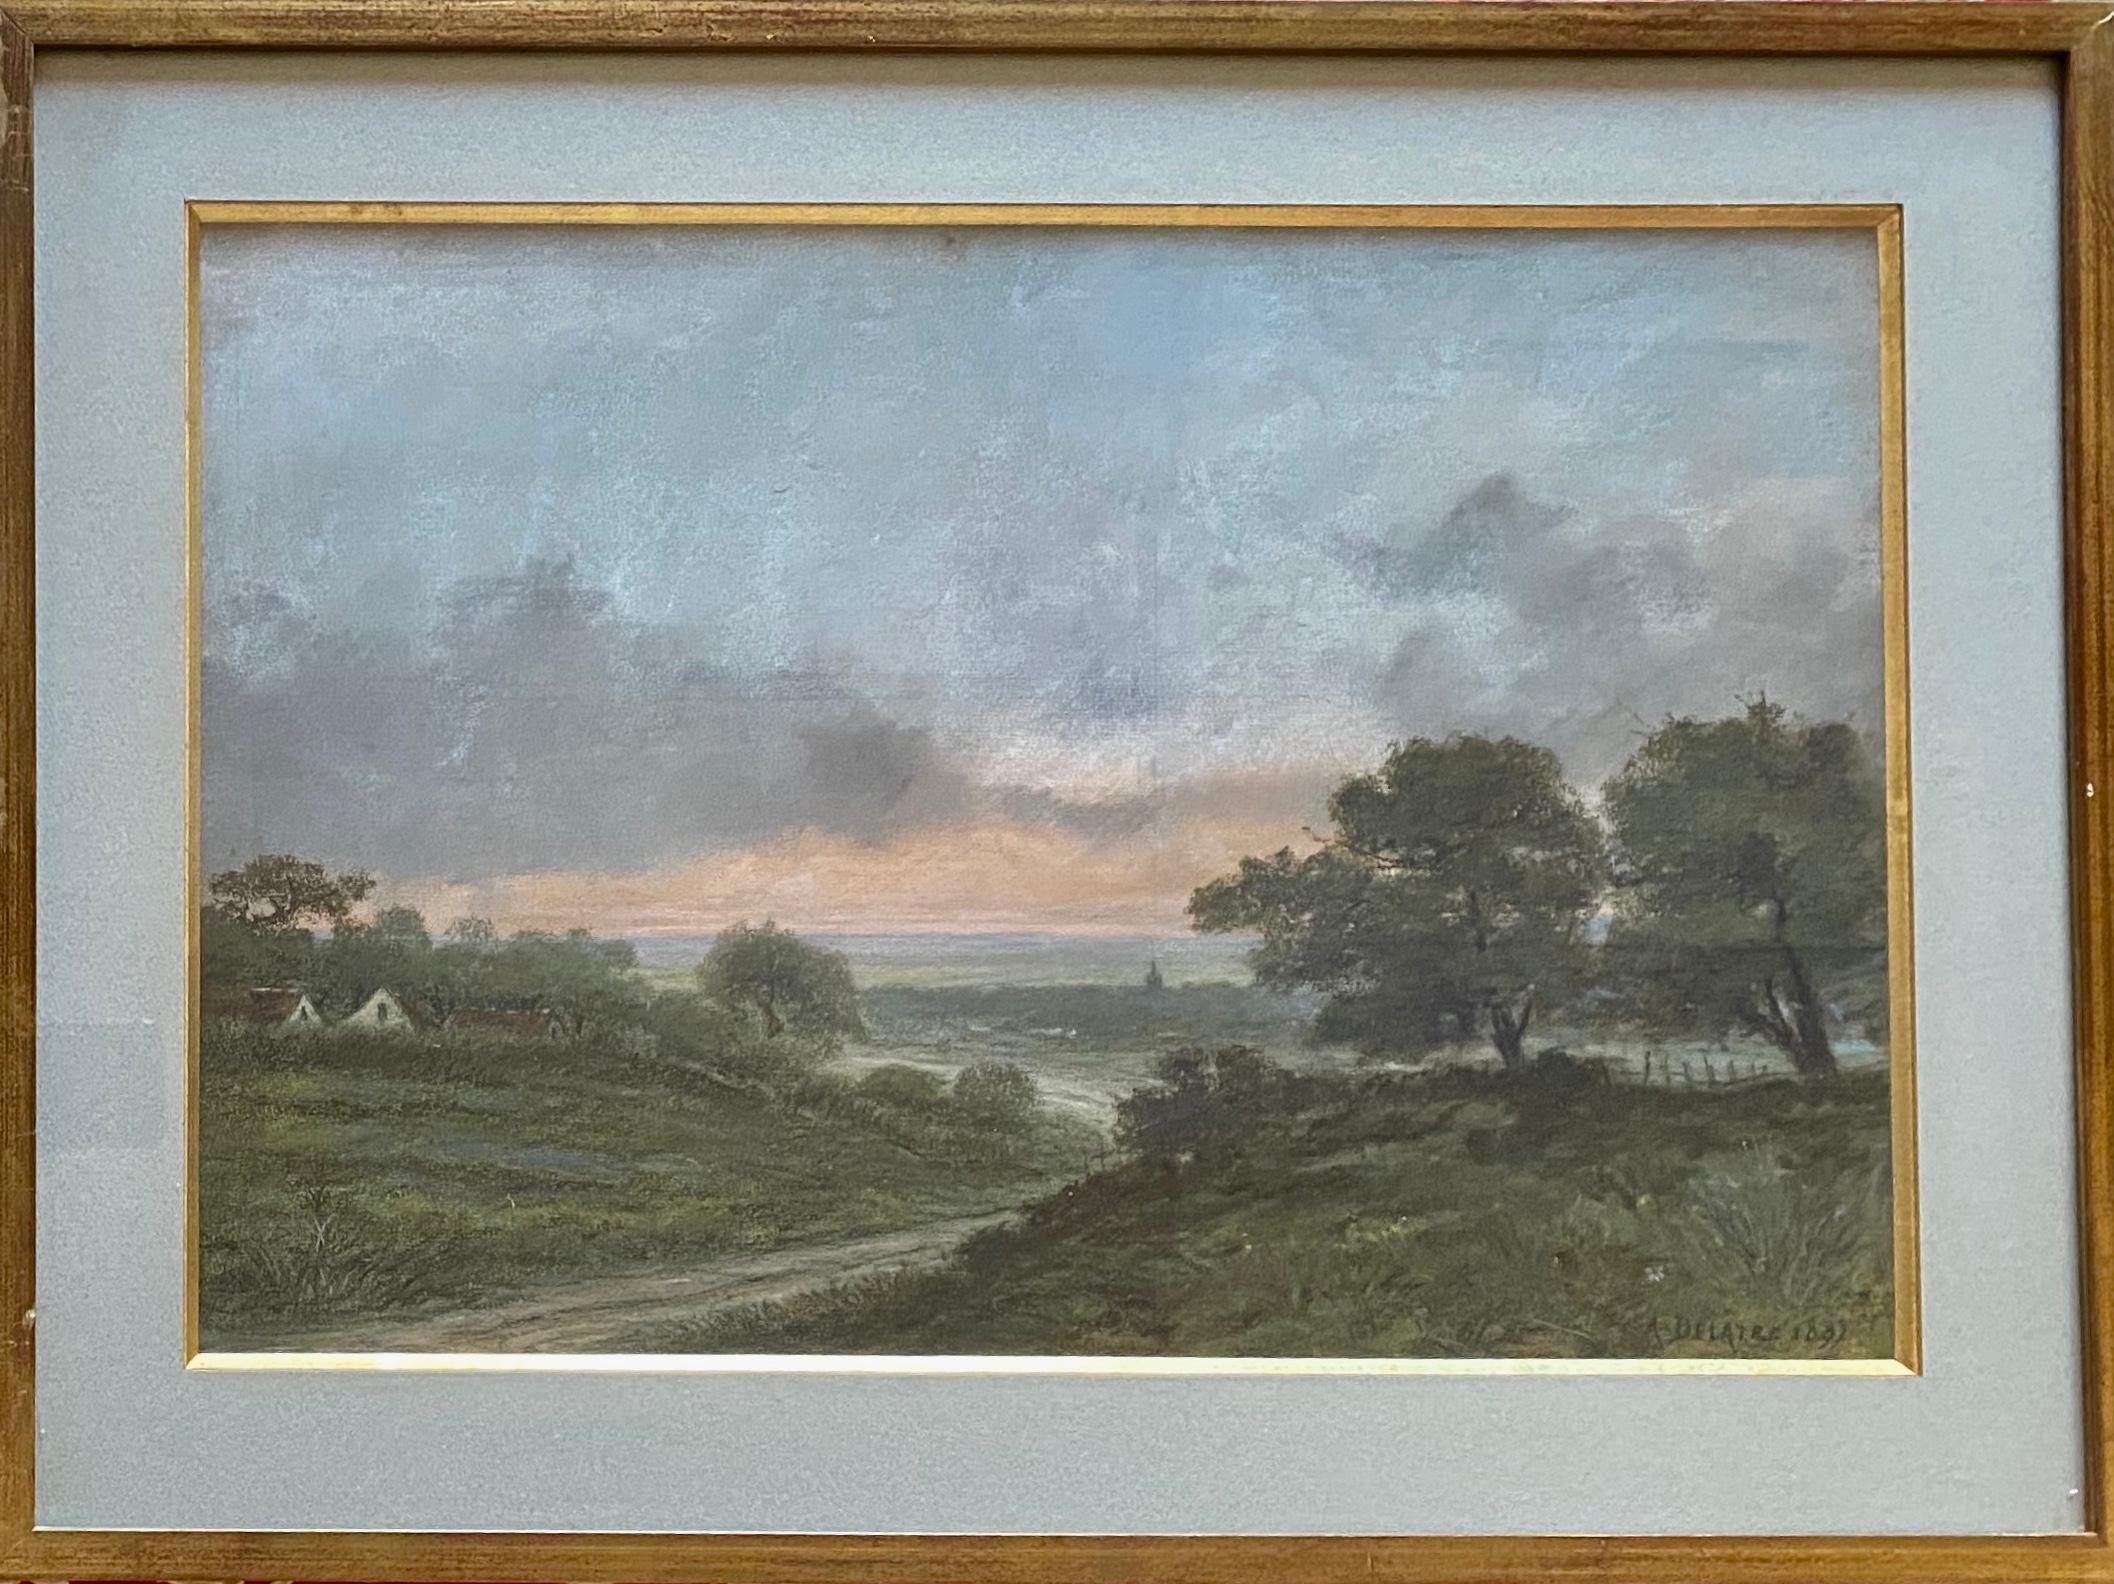 Summer landscape by Whistler's French artist friend Delâtre, Barbizon connection